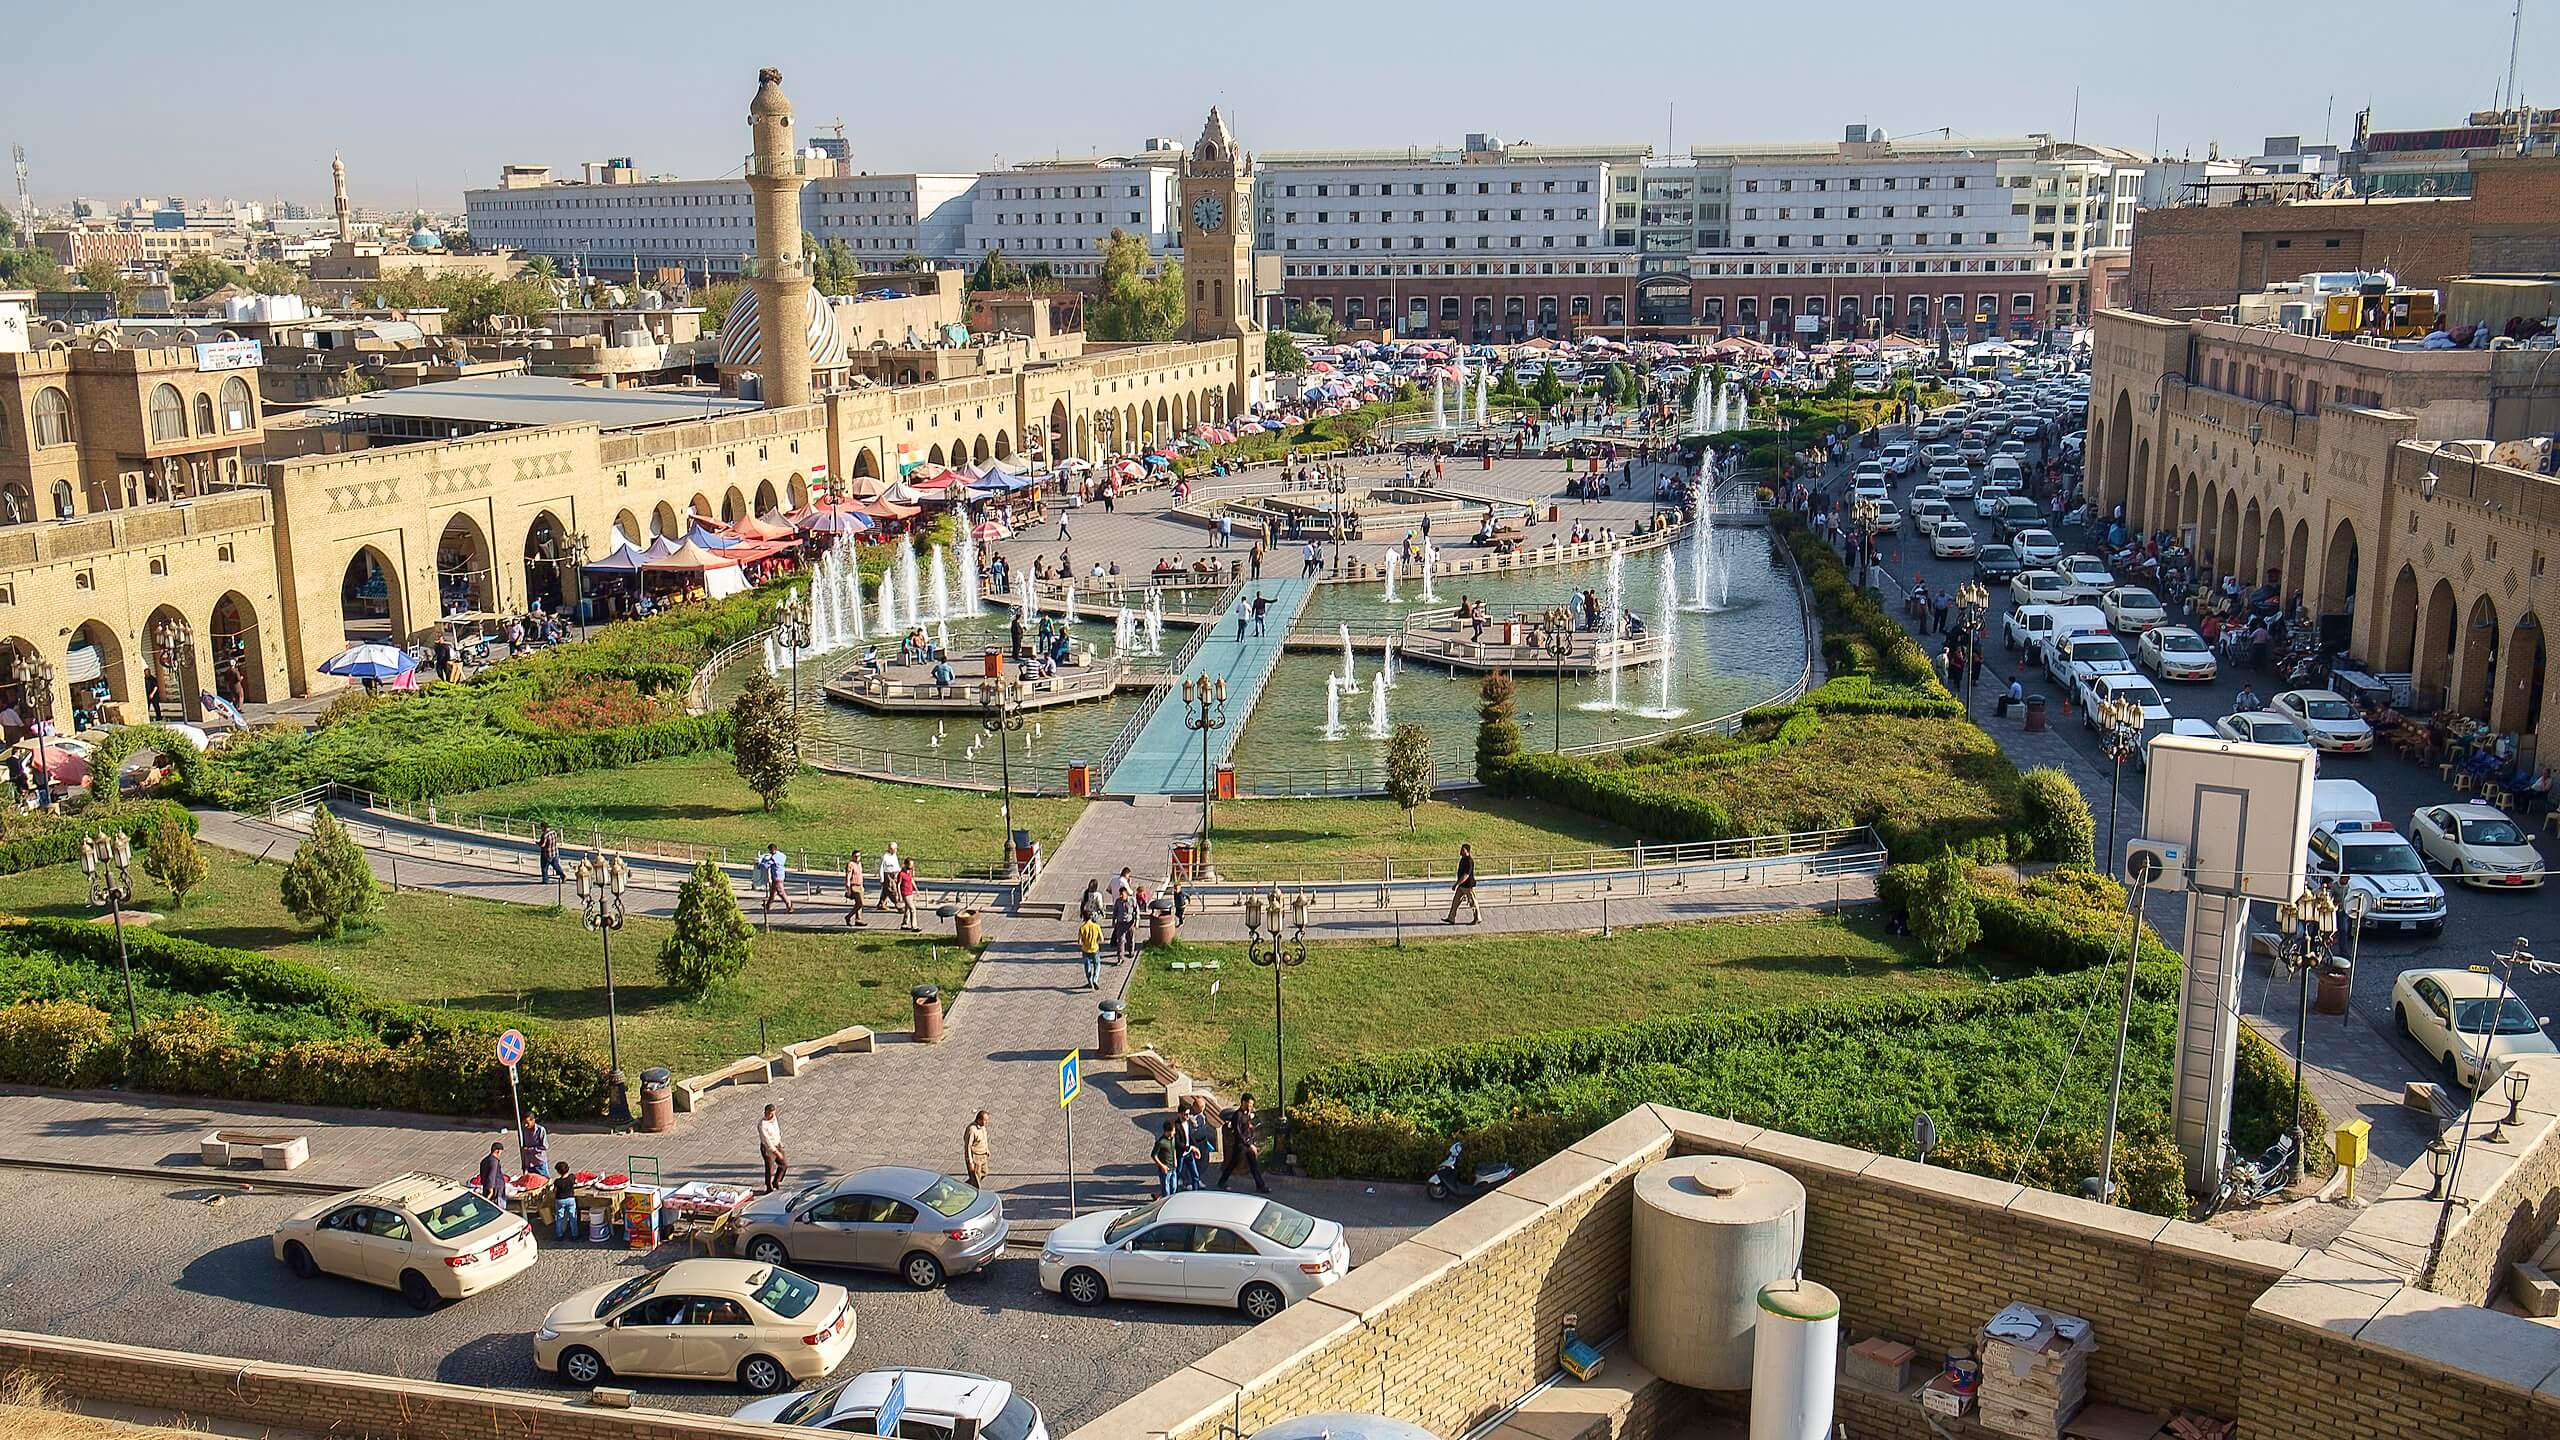 Iraqi Kurdistan Guide: Erbil Citadel Fountains